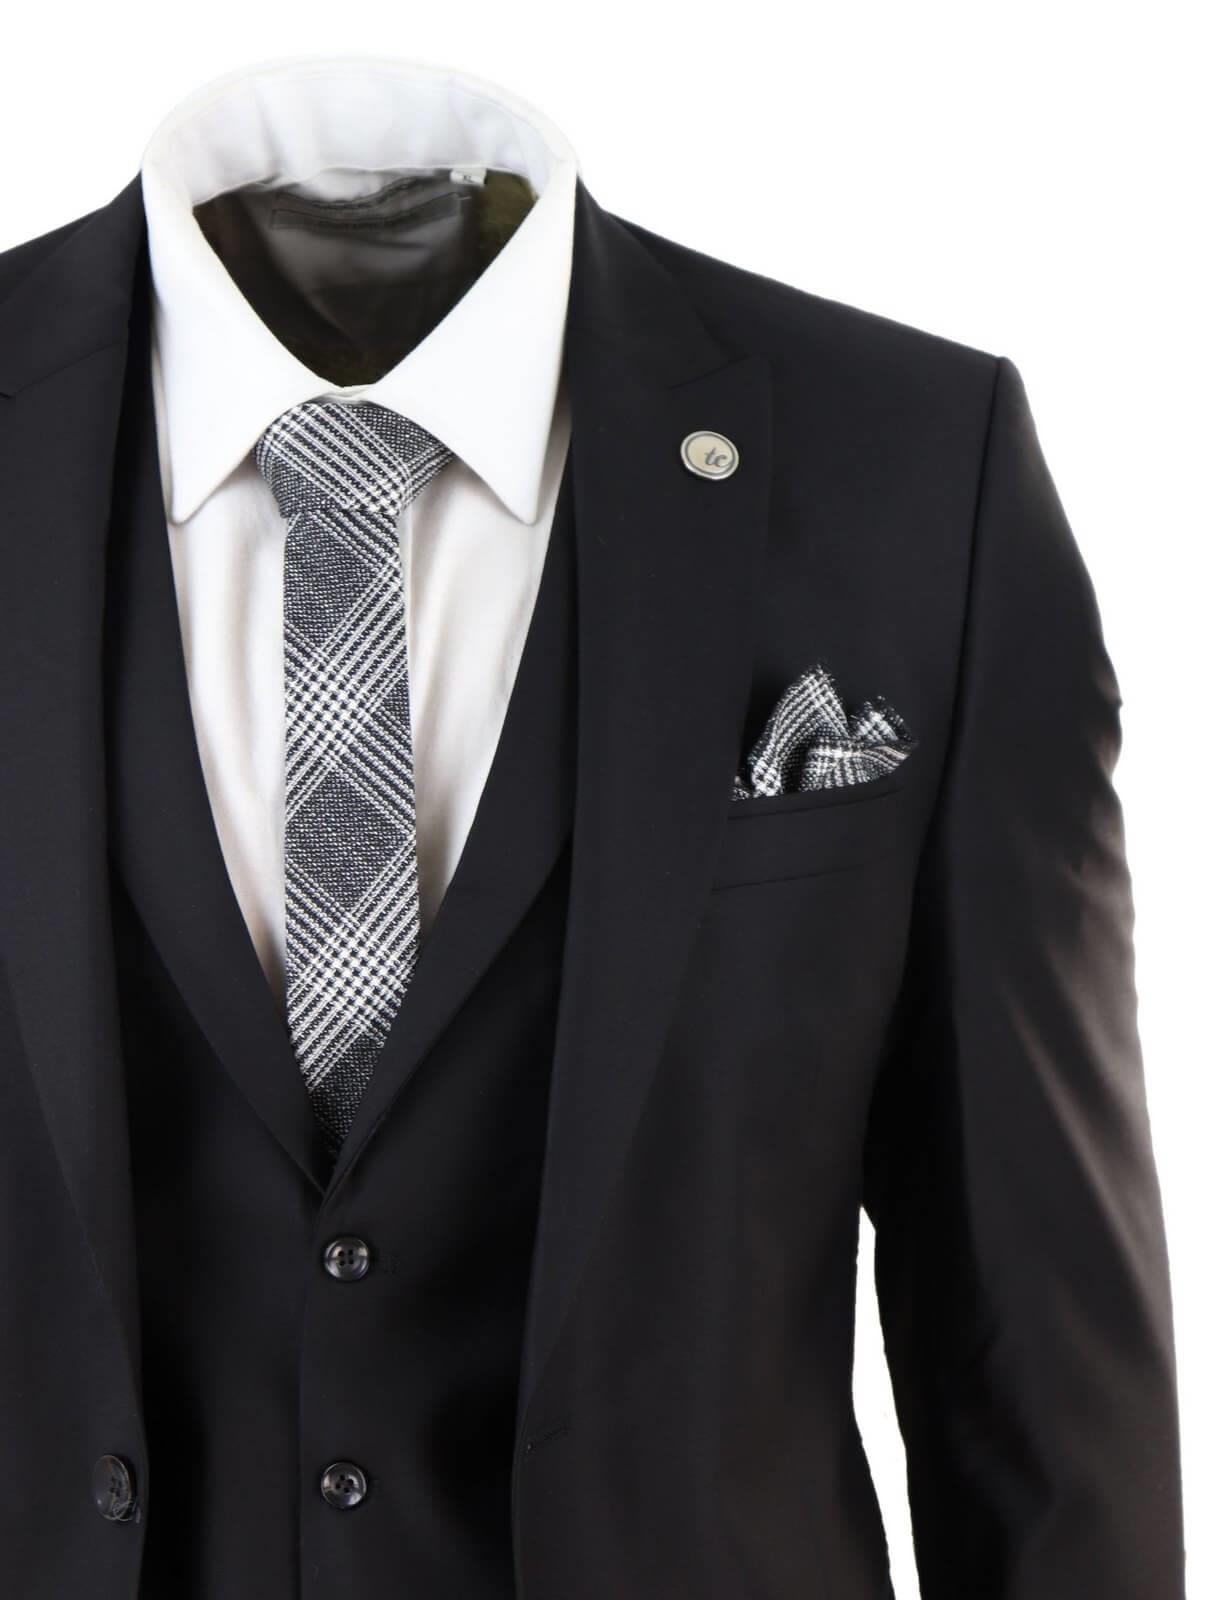 New Mens 3 Piece Suit Plain Black Classic Tailored Fit Smart Casual 1920s Formal